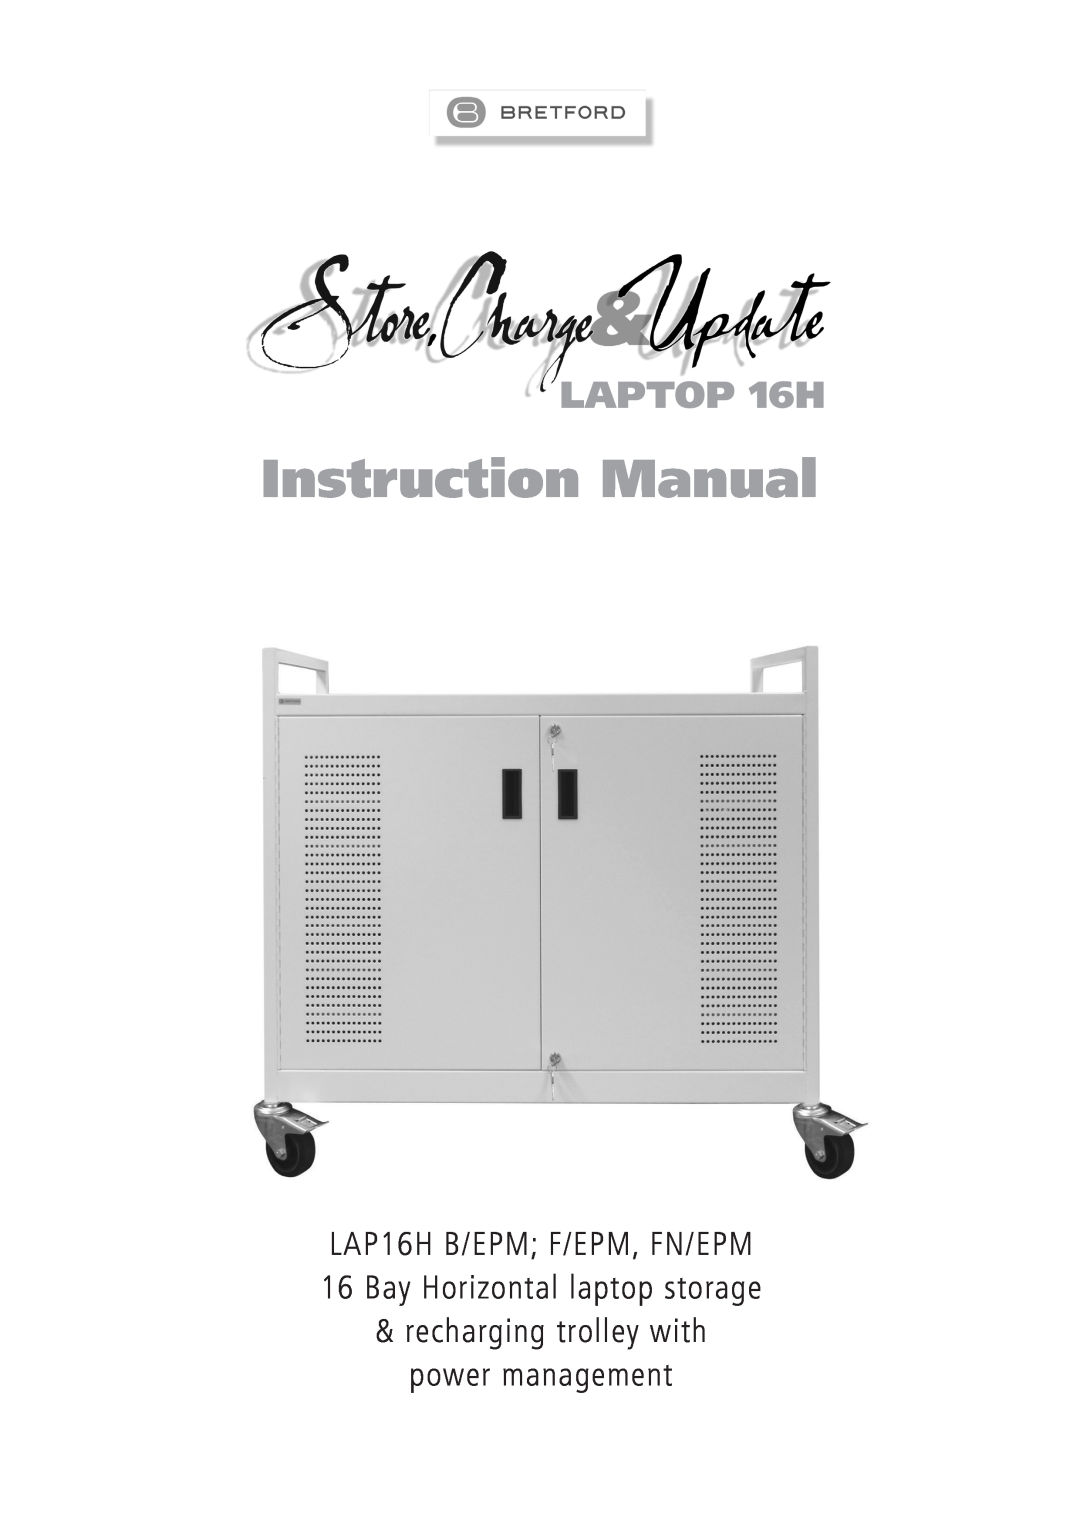 Bretford EPM, LAP16H B instruction manual Instruction Manual, LAPTOP 16H, recharging trolley with power management 